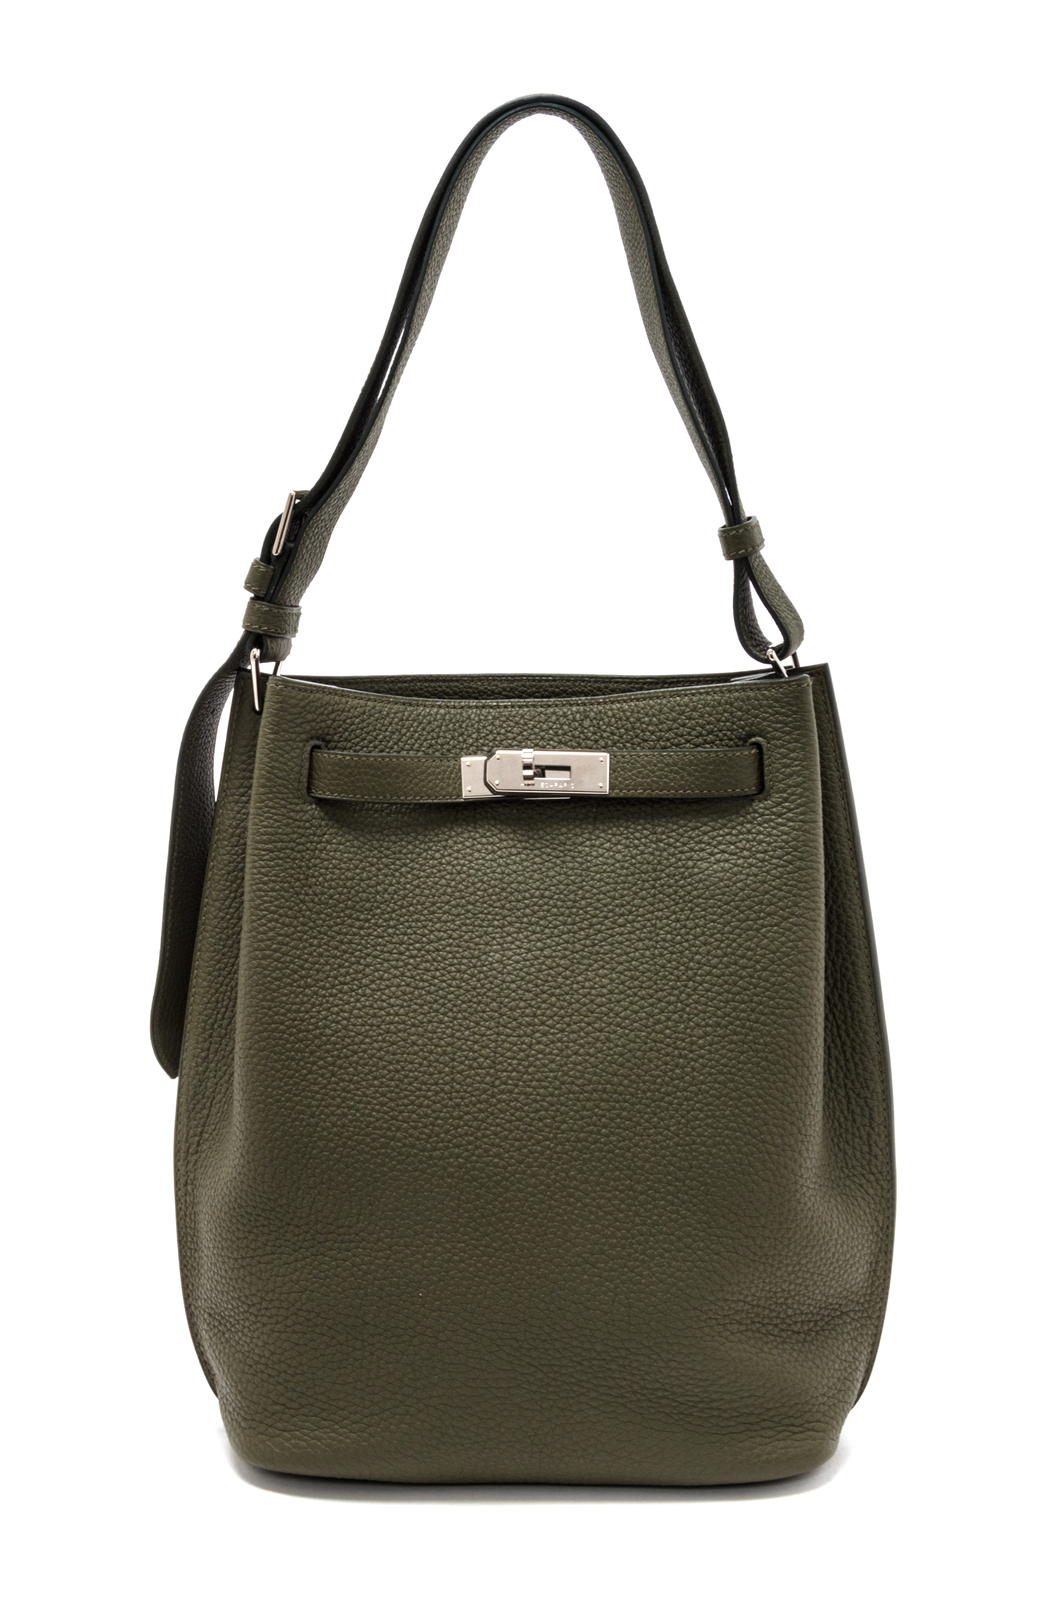 An Hermes Vert Veronese Togo 22cm So-Kelly Handbag, 9 x 11 x 4.5.